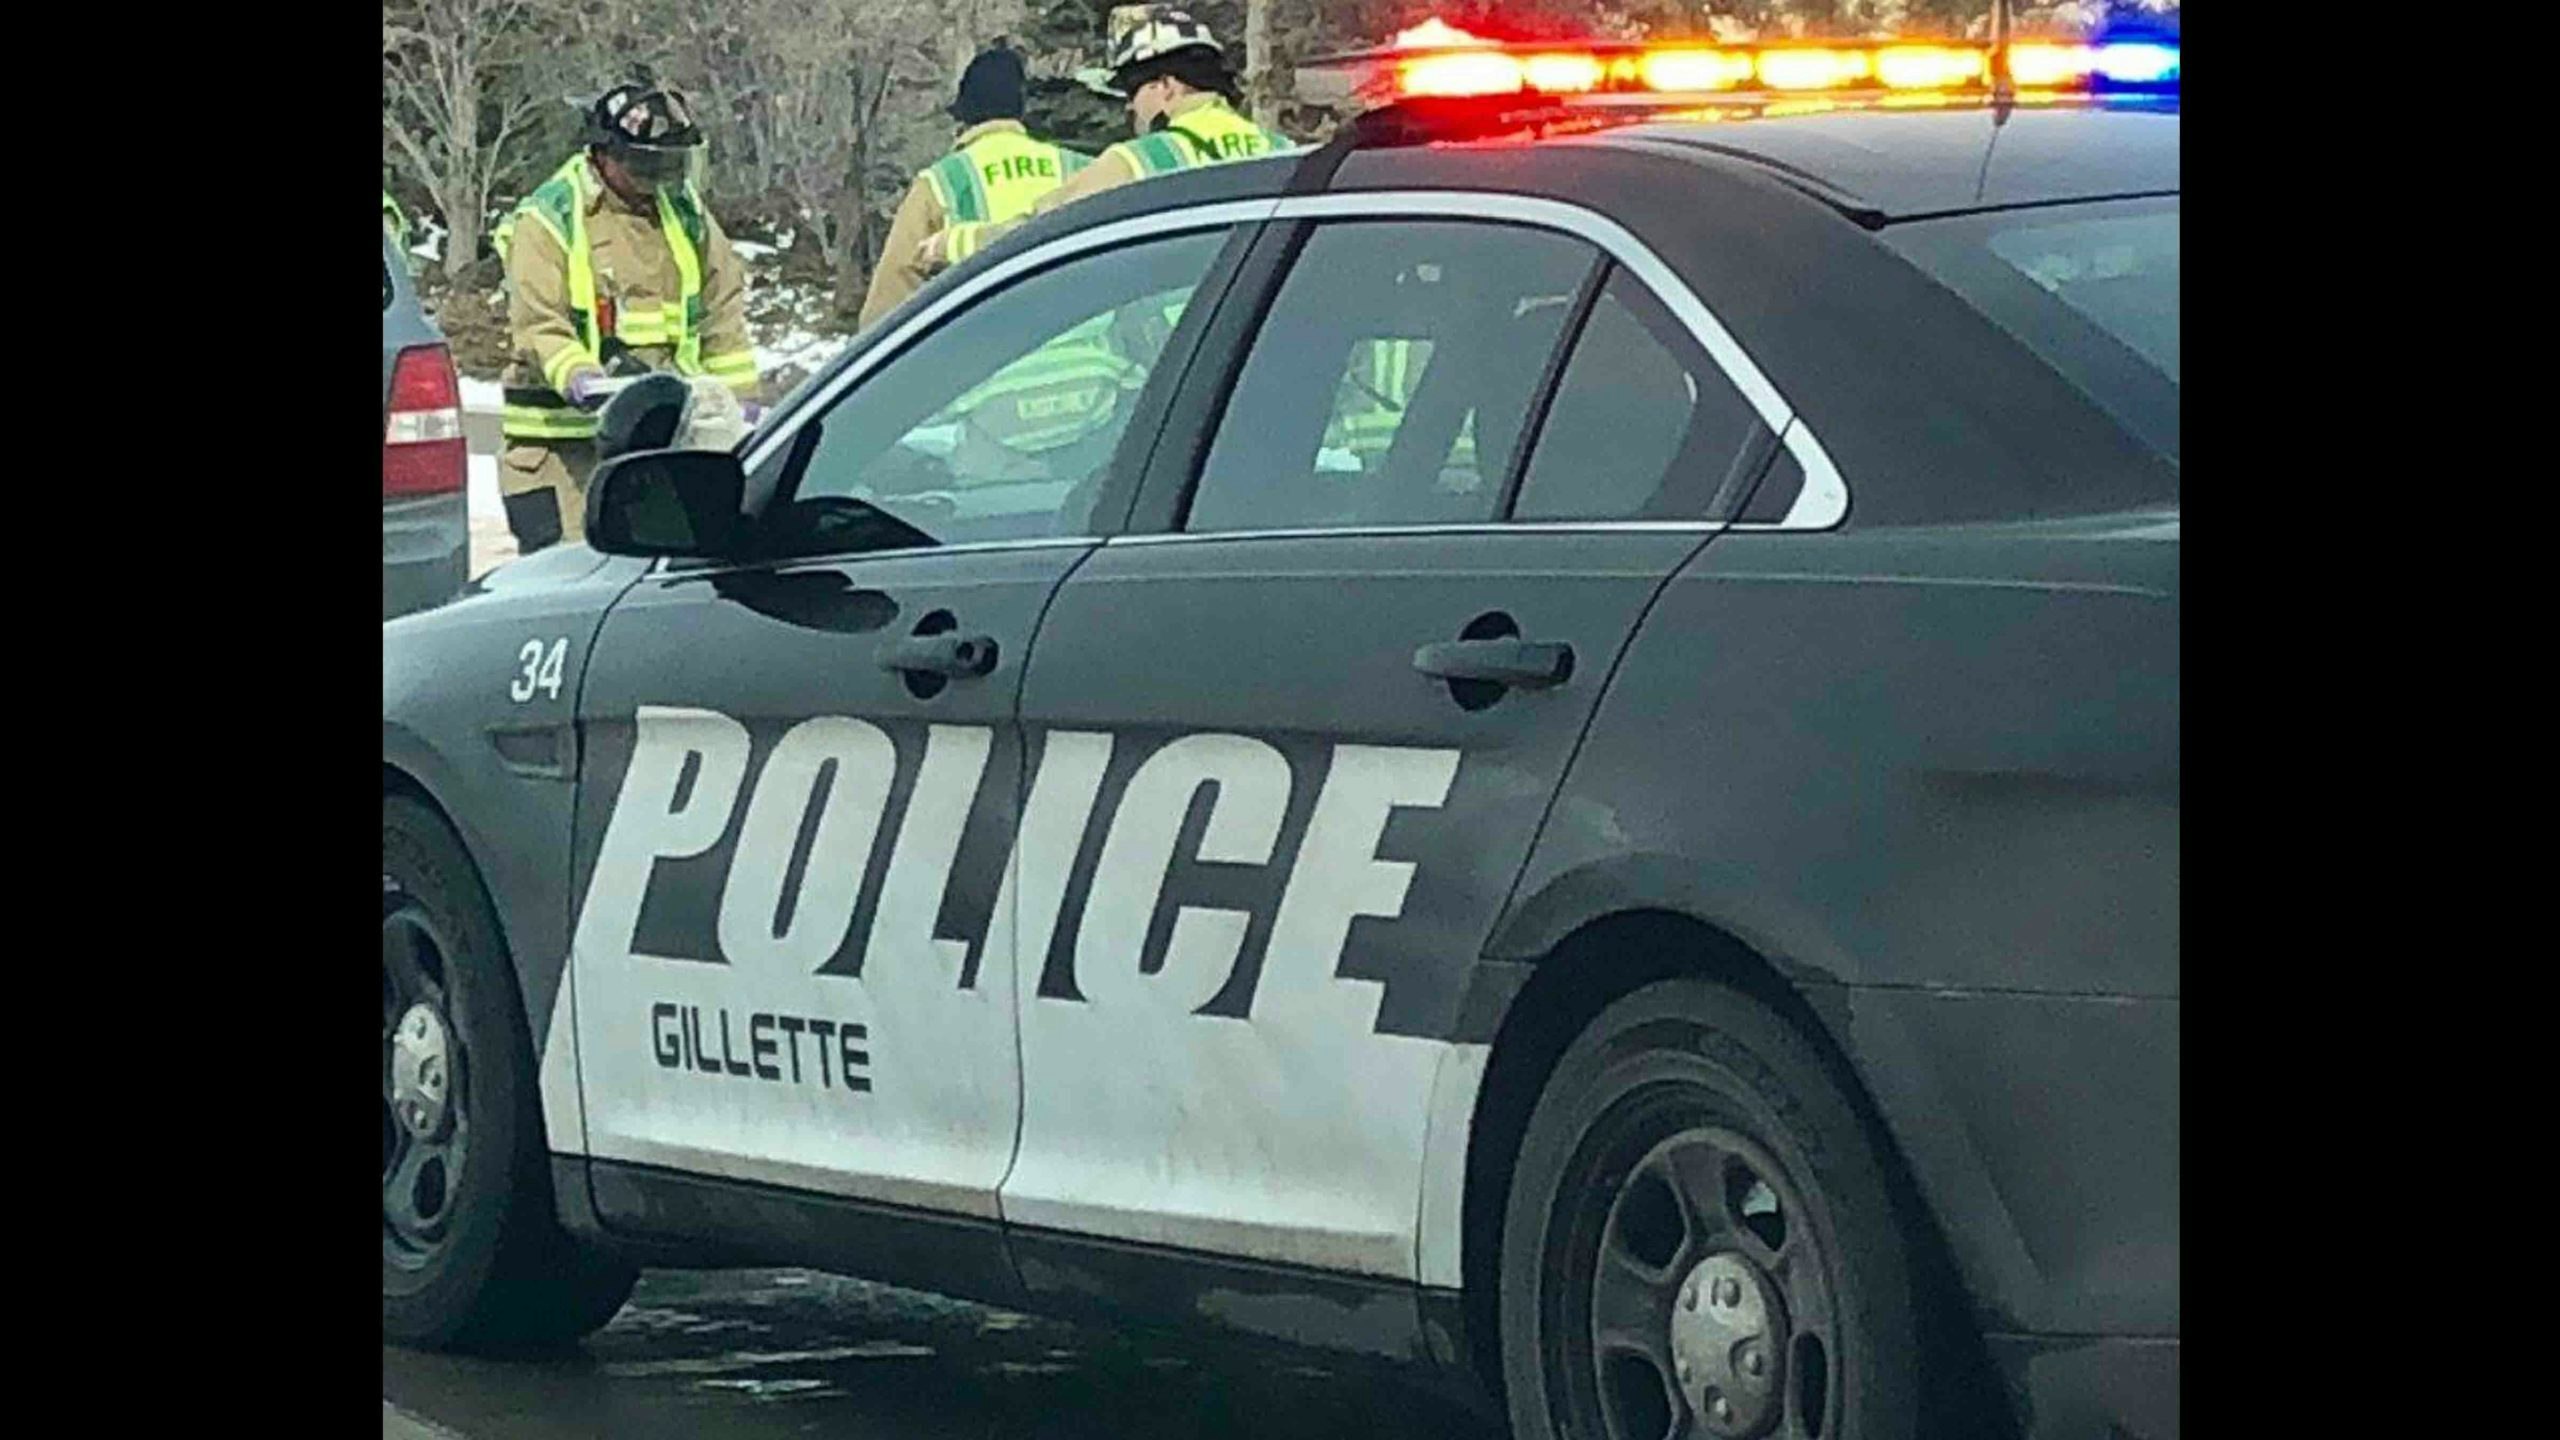 Gillette police scaled